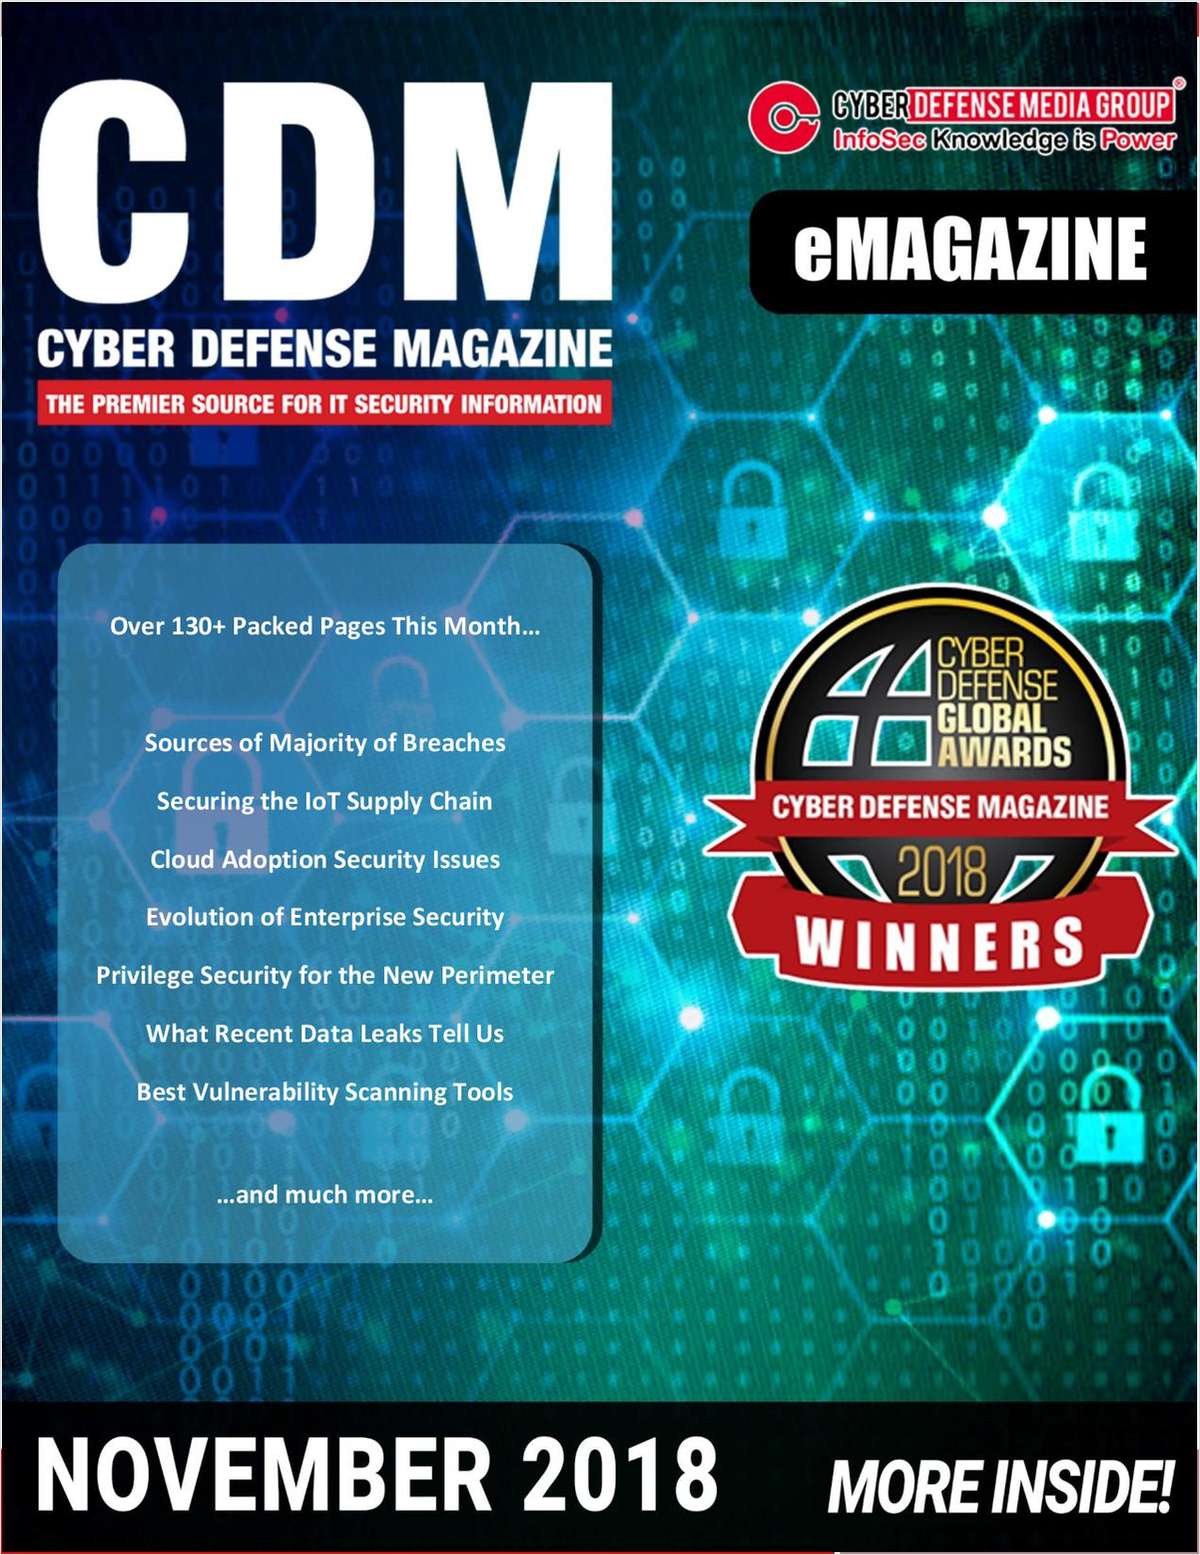 Cyber Defense eMagazine - Evolution of Enterprise Security - November 2018 Edition